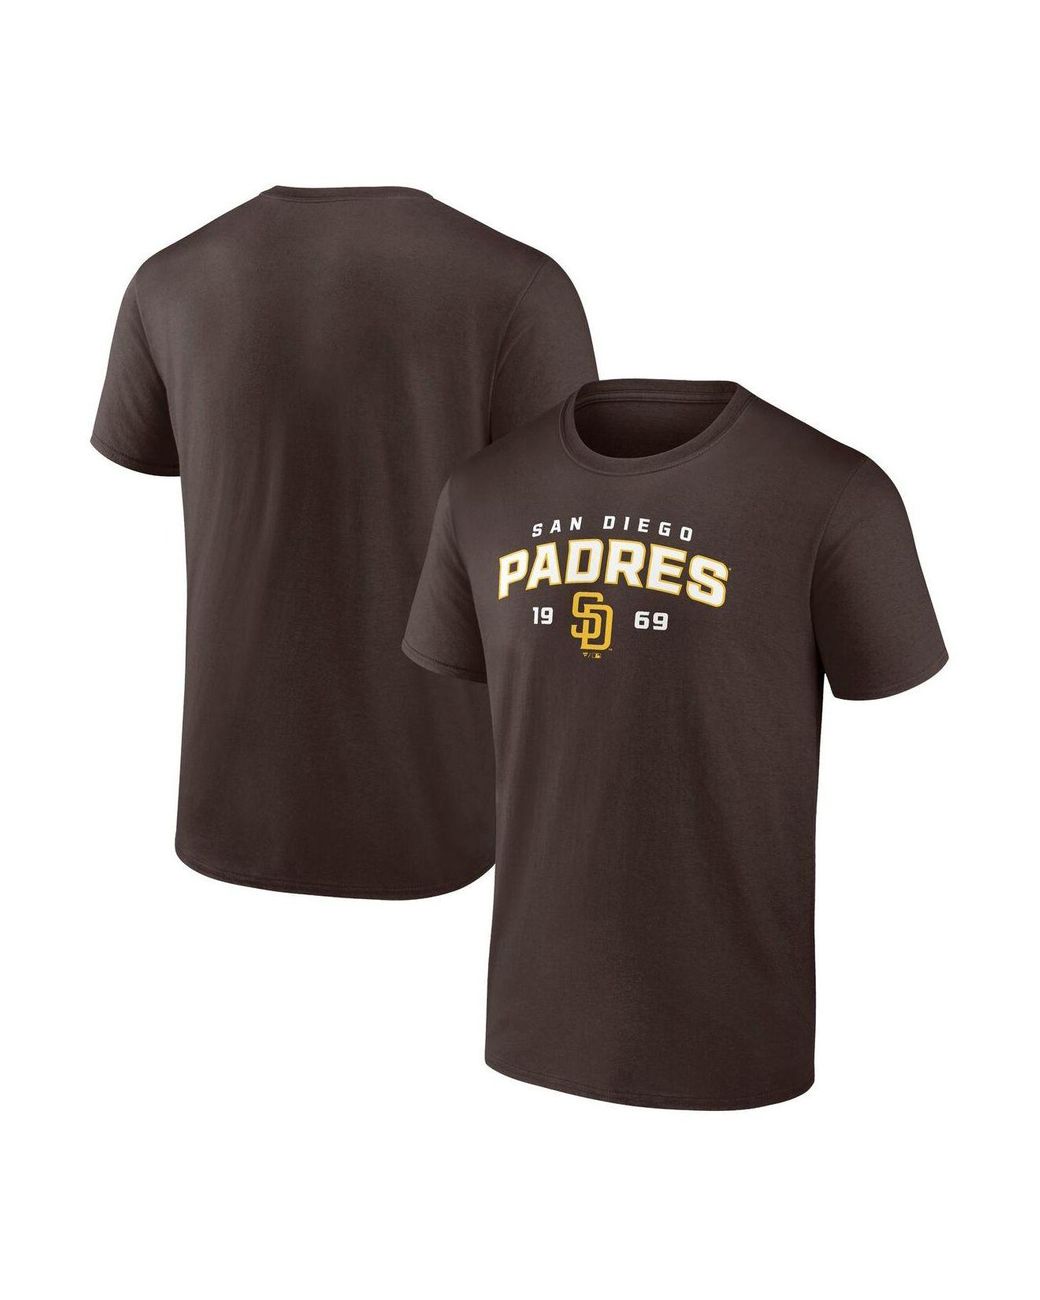 Fanatics Branded Brown San Diego Padres Rebel T-shirt for Men